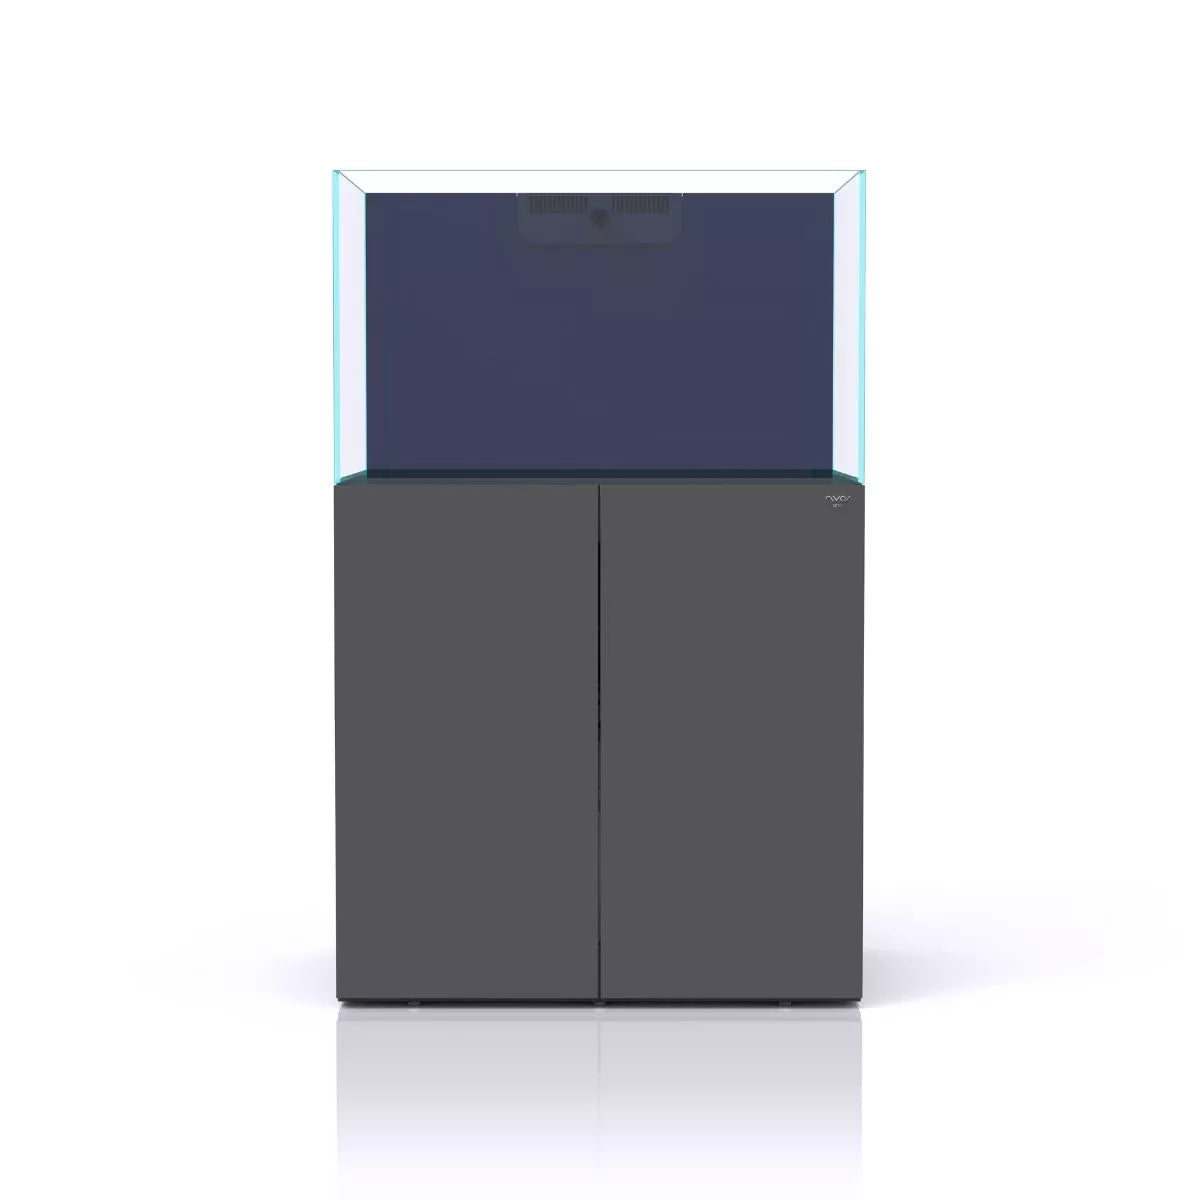 Nyos OPUS G2 300 Aquarium w/ Slim-Line Cabinet (Grey)